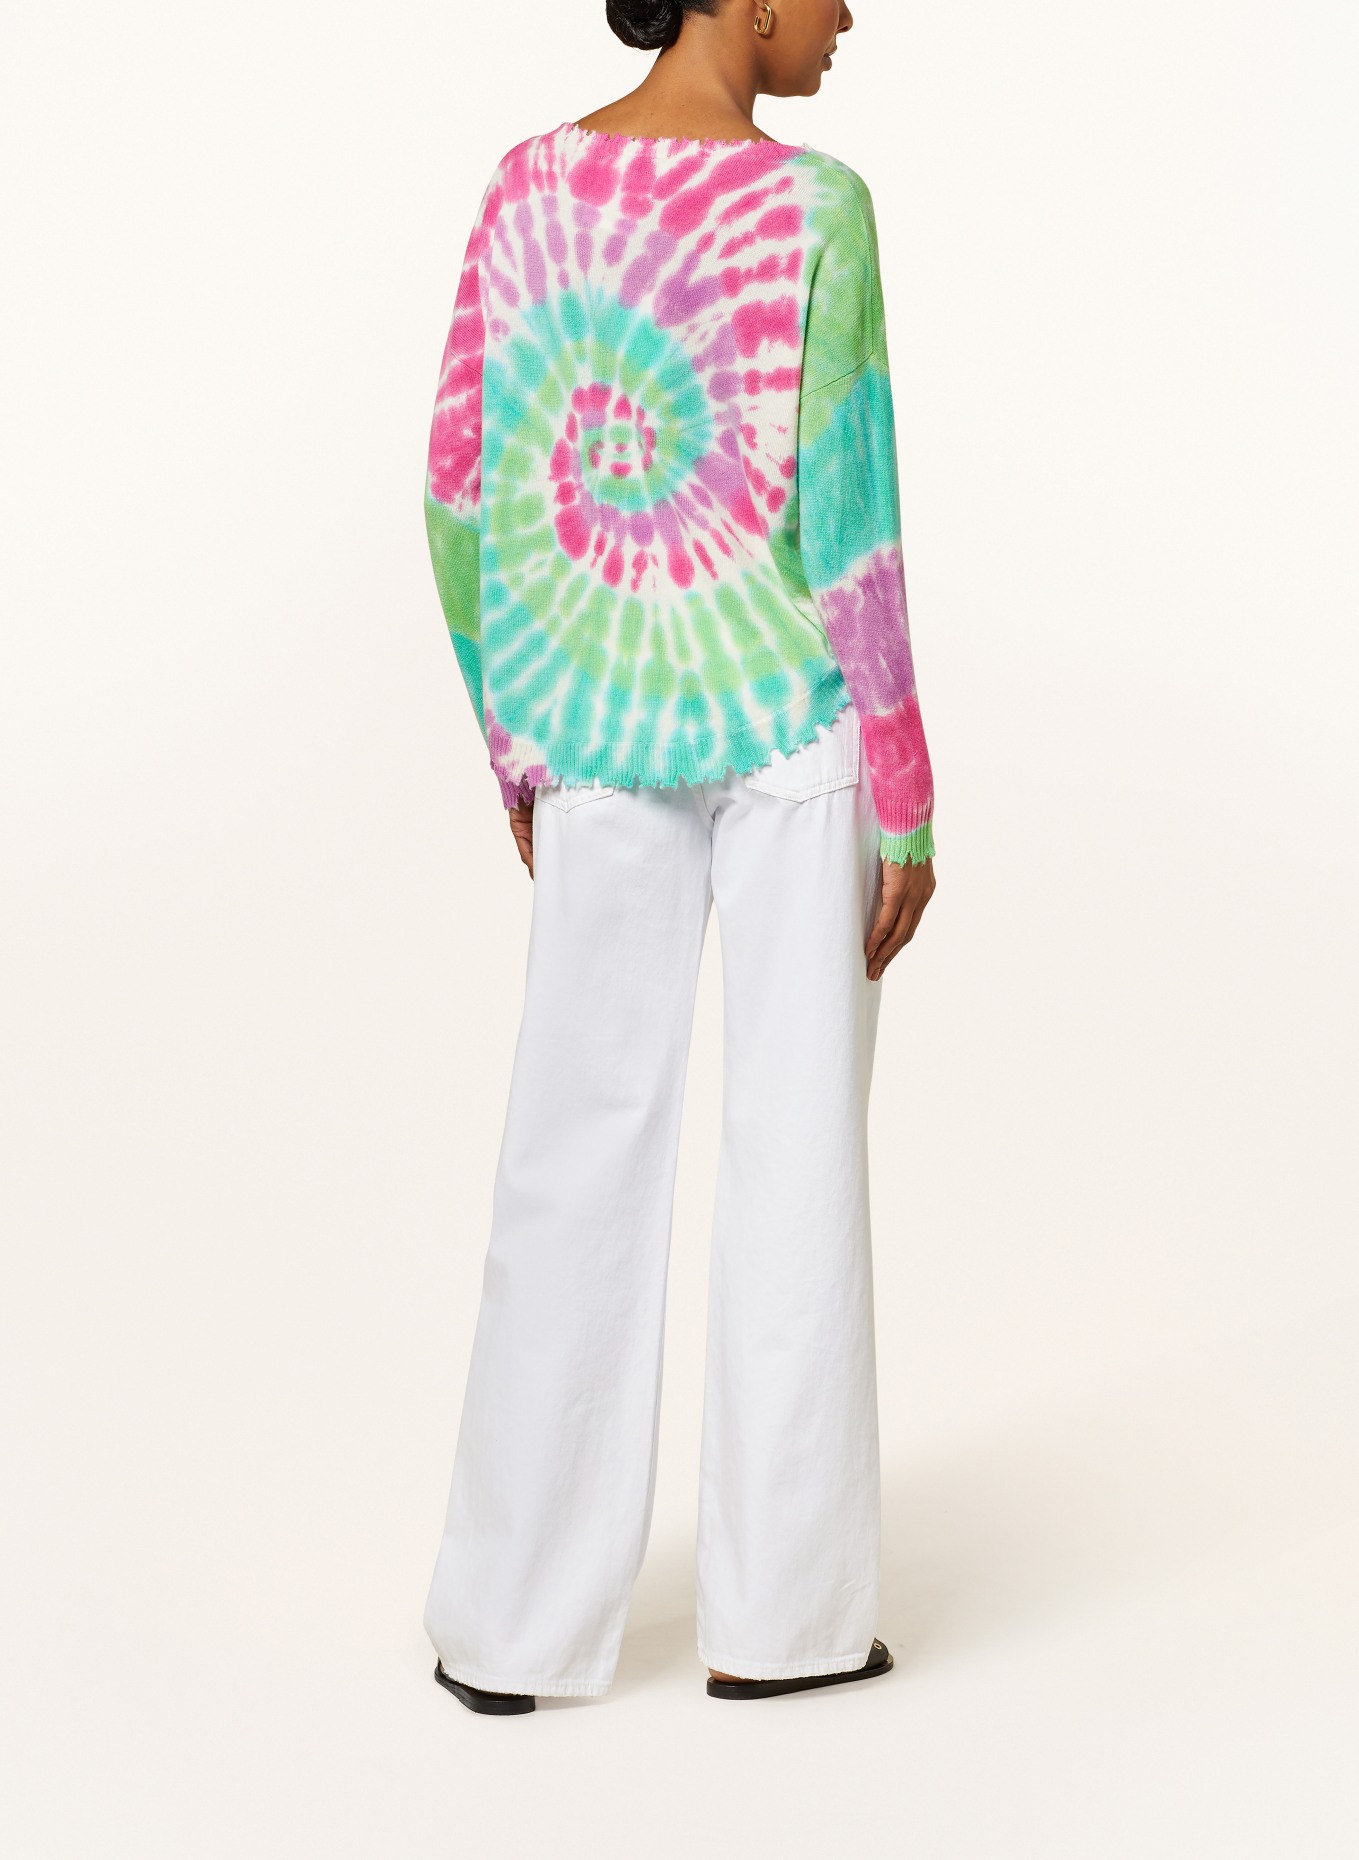 KUJTEN Cashmere-Pullover MELA SUNNY, Farbe: GRÜN/ LILA/ PINK (Bild 3)